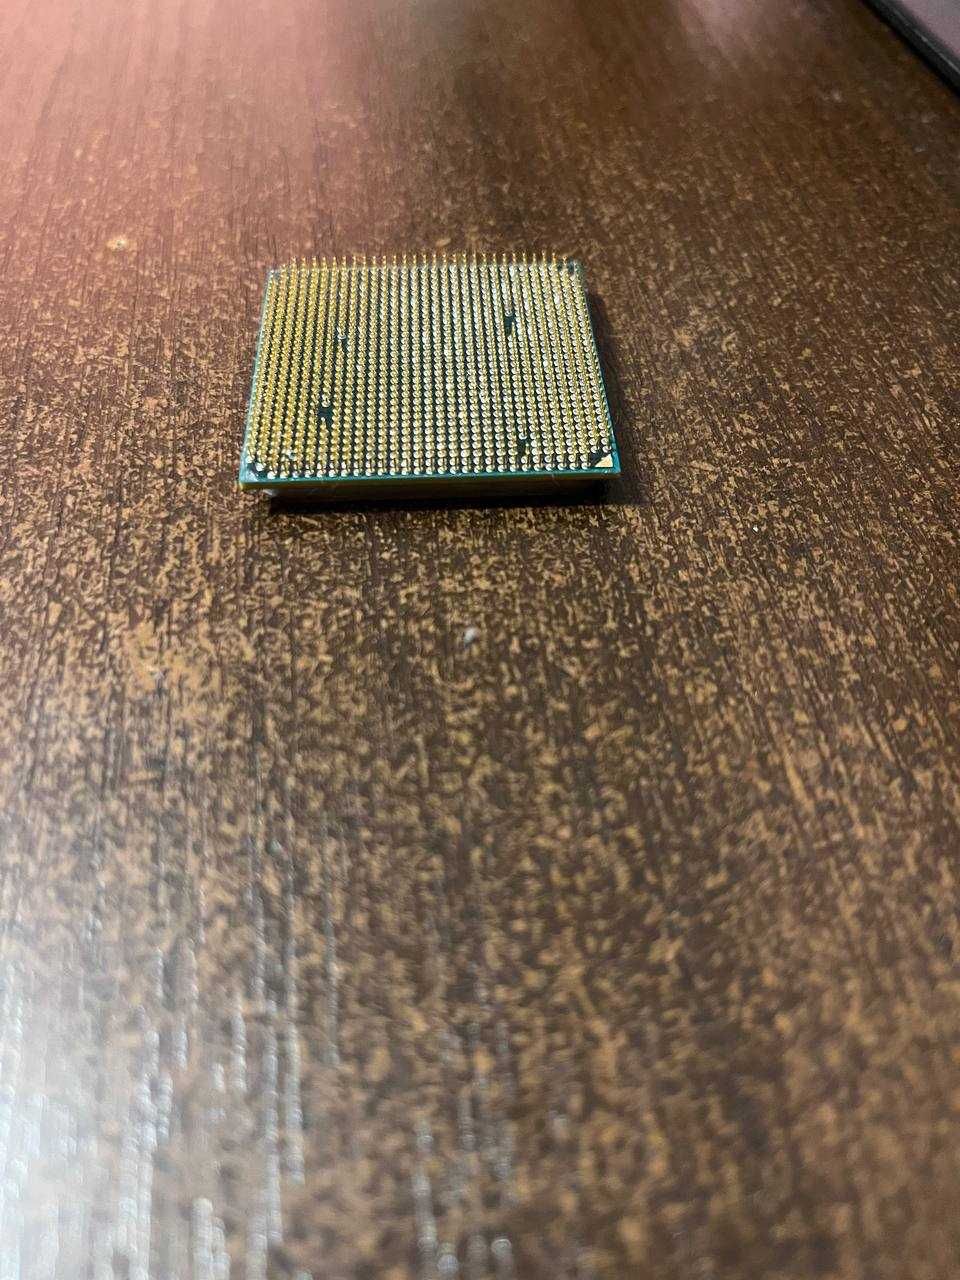 Процесор AMD Athlon II X2 250 3.00GHz/